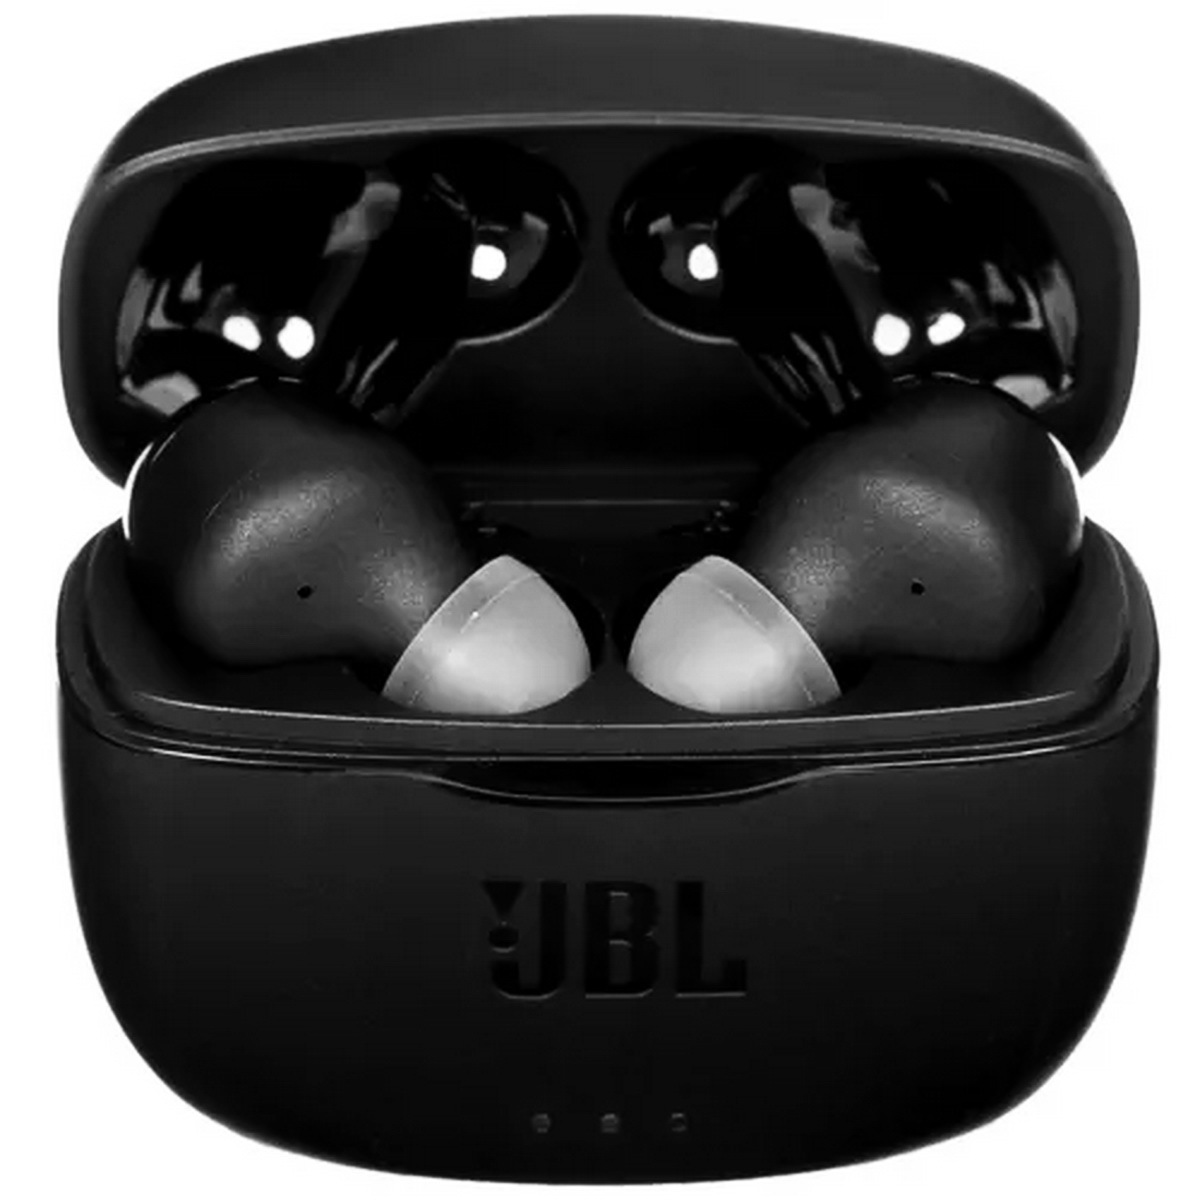 Наушники tune 215bt. JBL Tune 215tws. JBL t215 TWS. JBL наушники беспроводные 215tws. Беспроводные наушники JBL Tune 215 TWS.